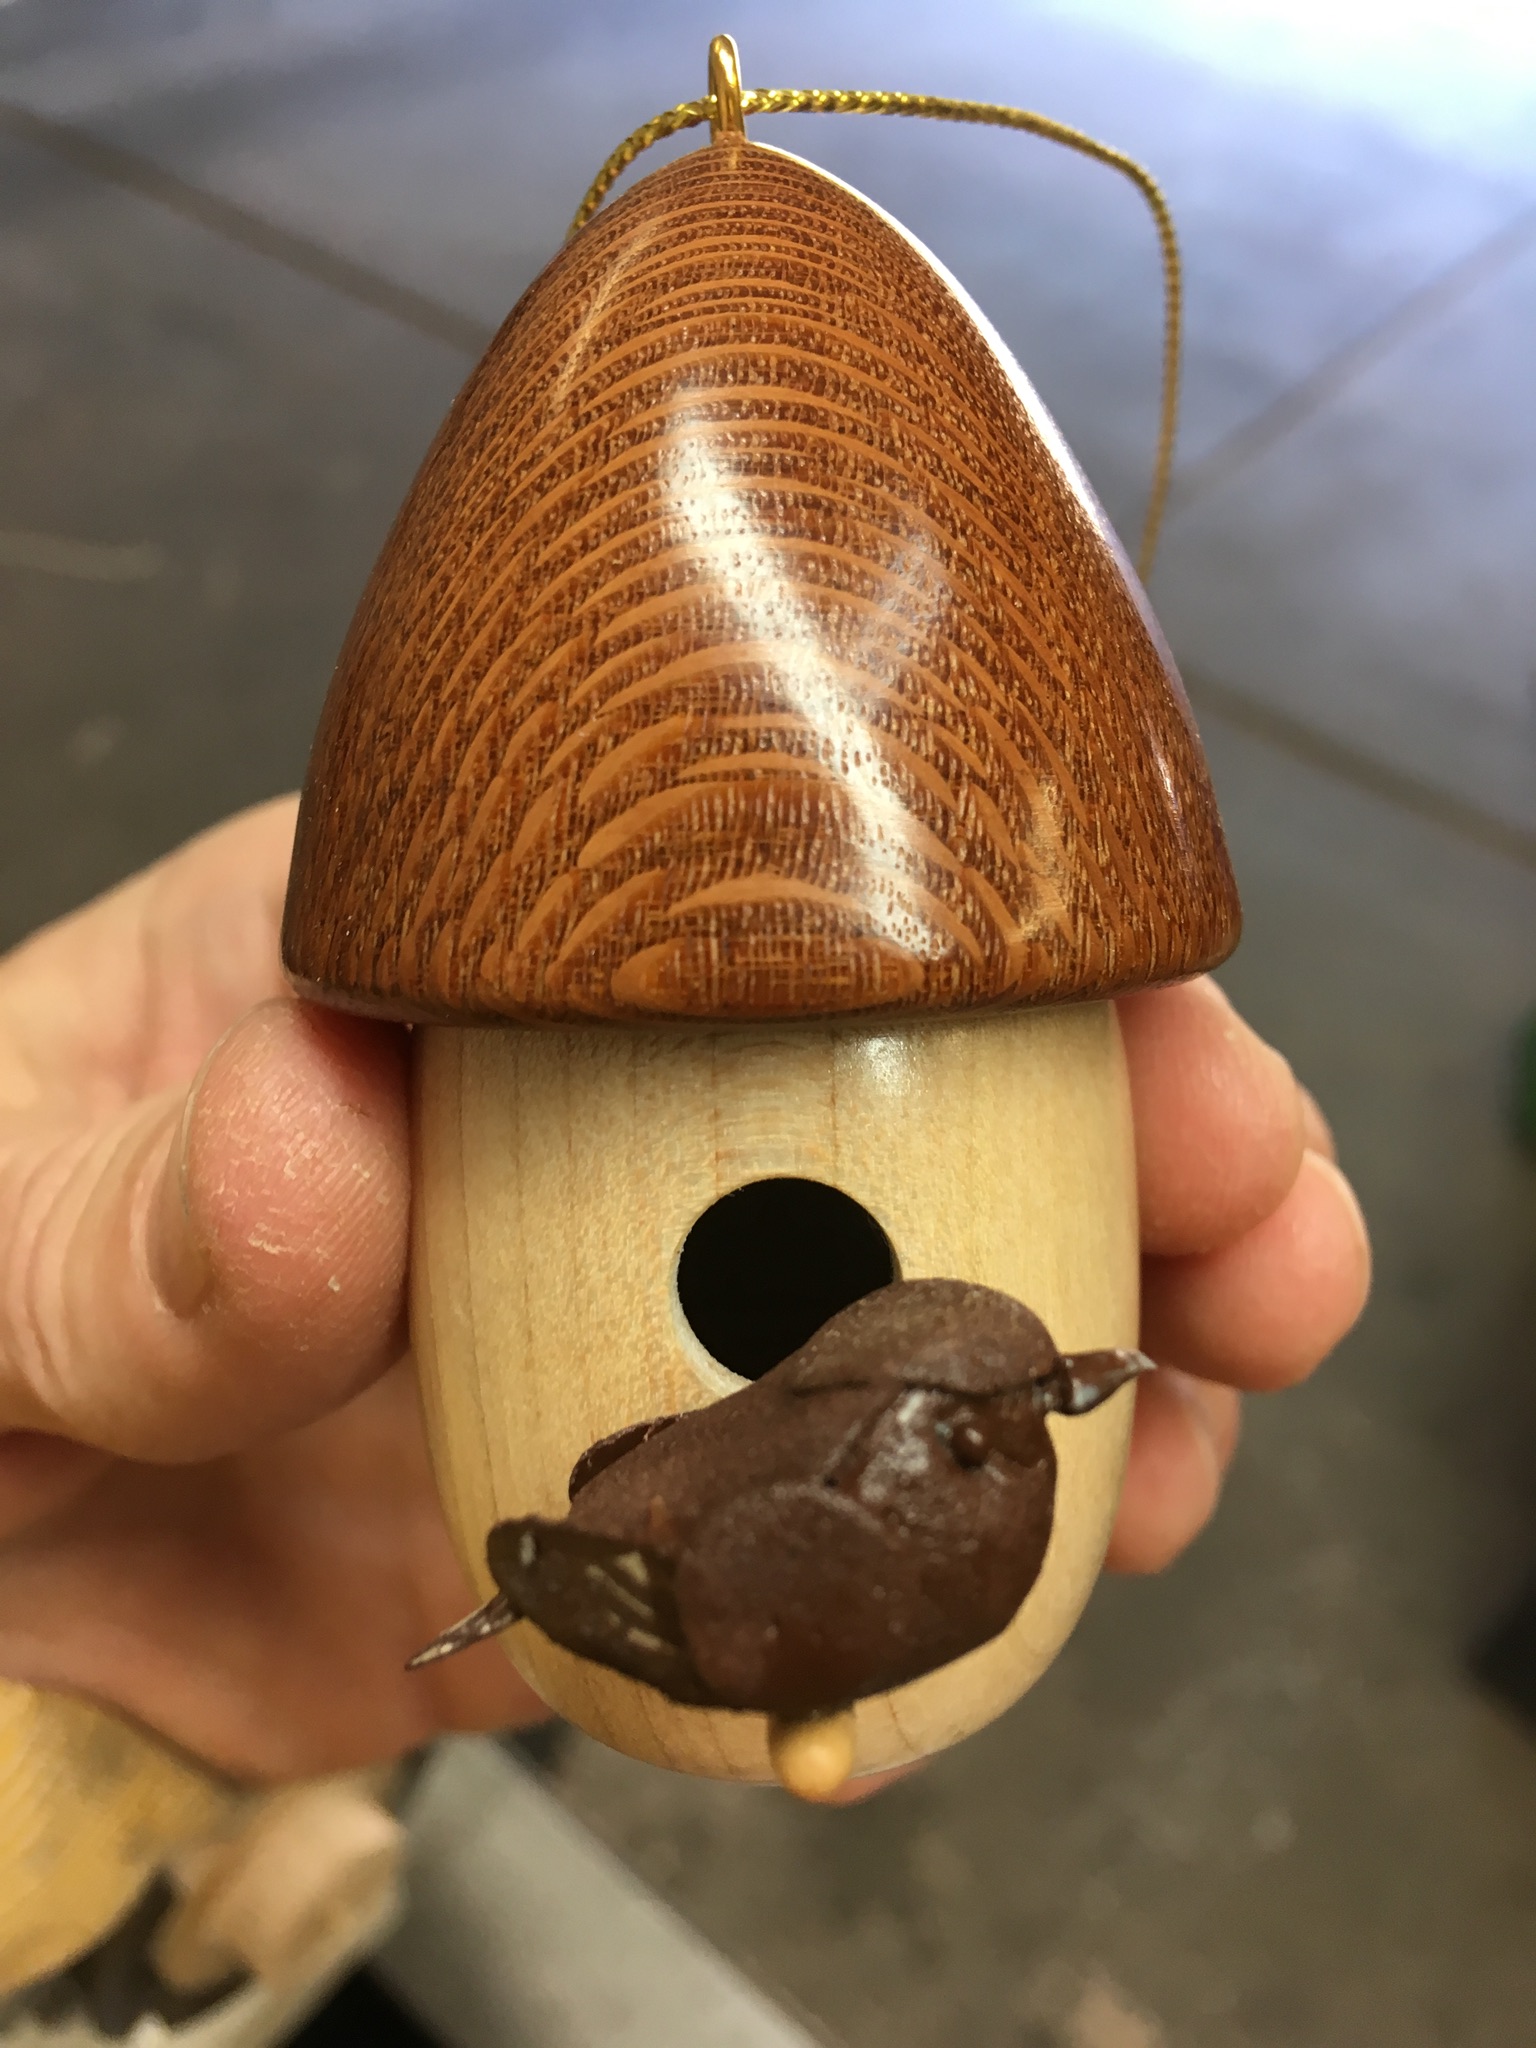 Maple/Leopardwood birdhouse ornament